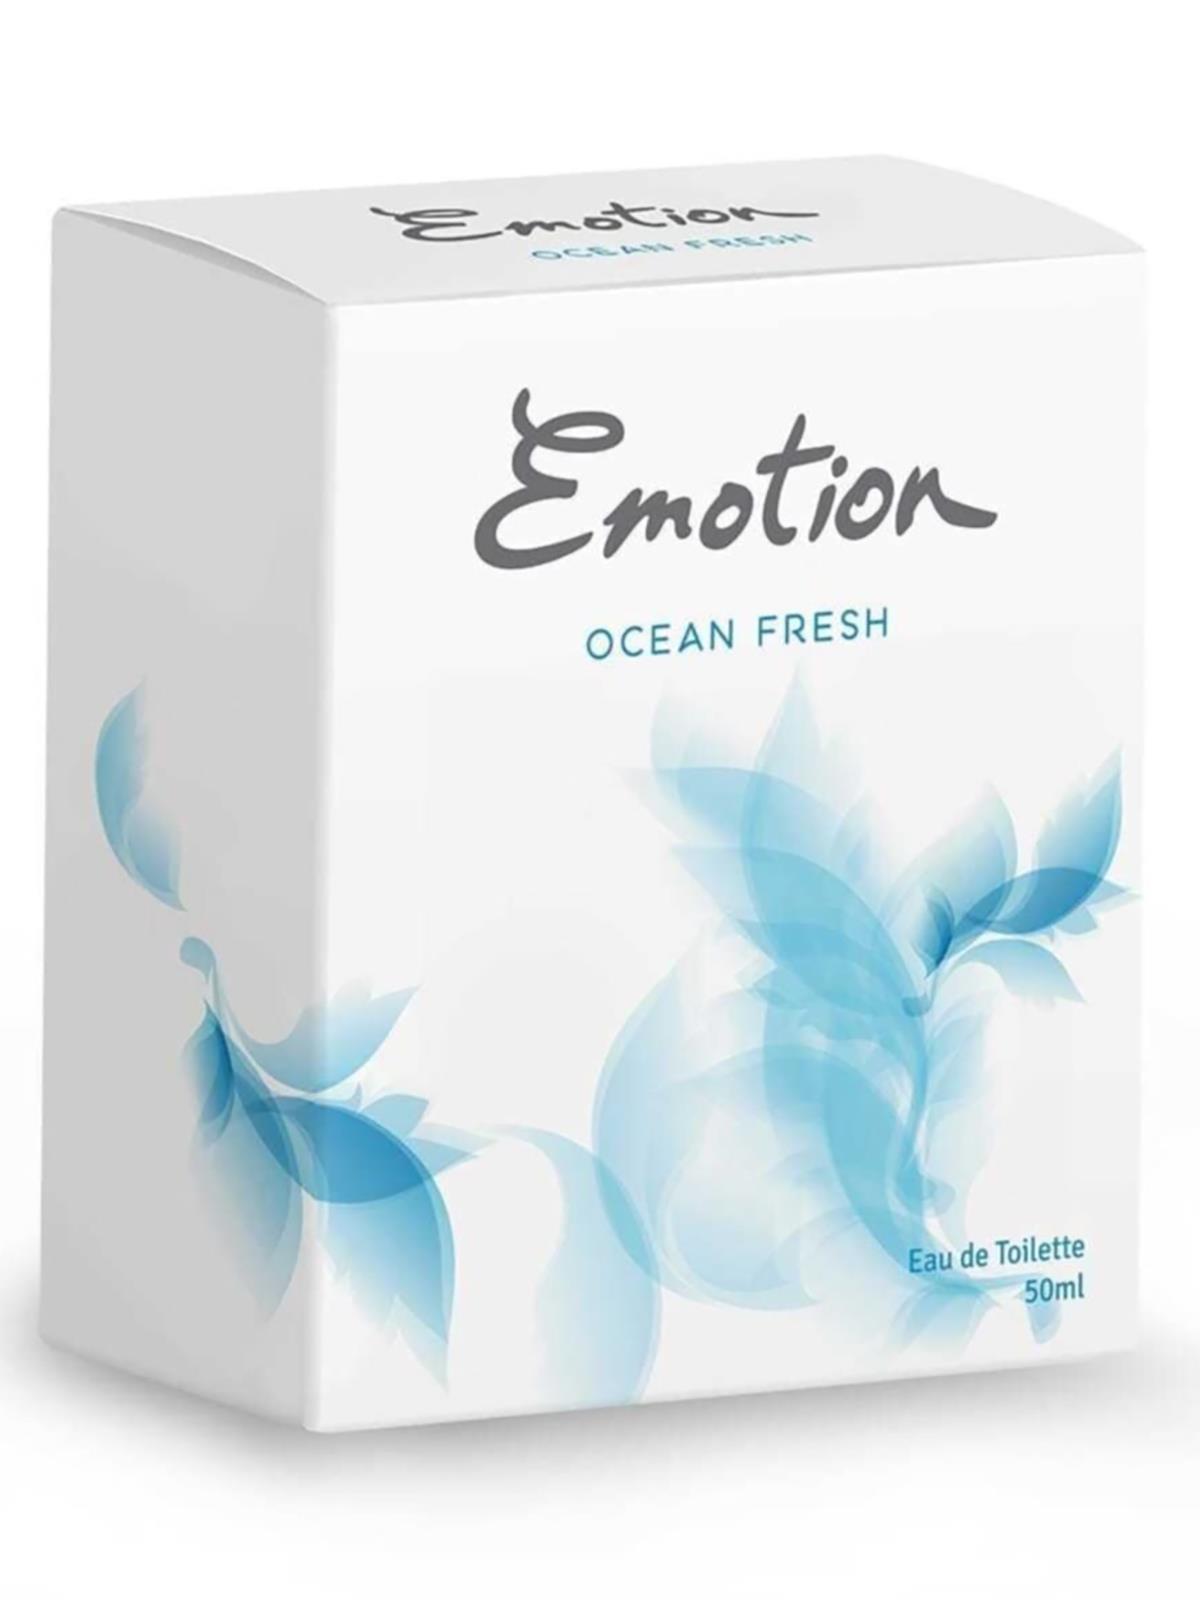 Emotion EDT Ocean Fresh 50 ml